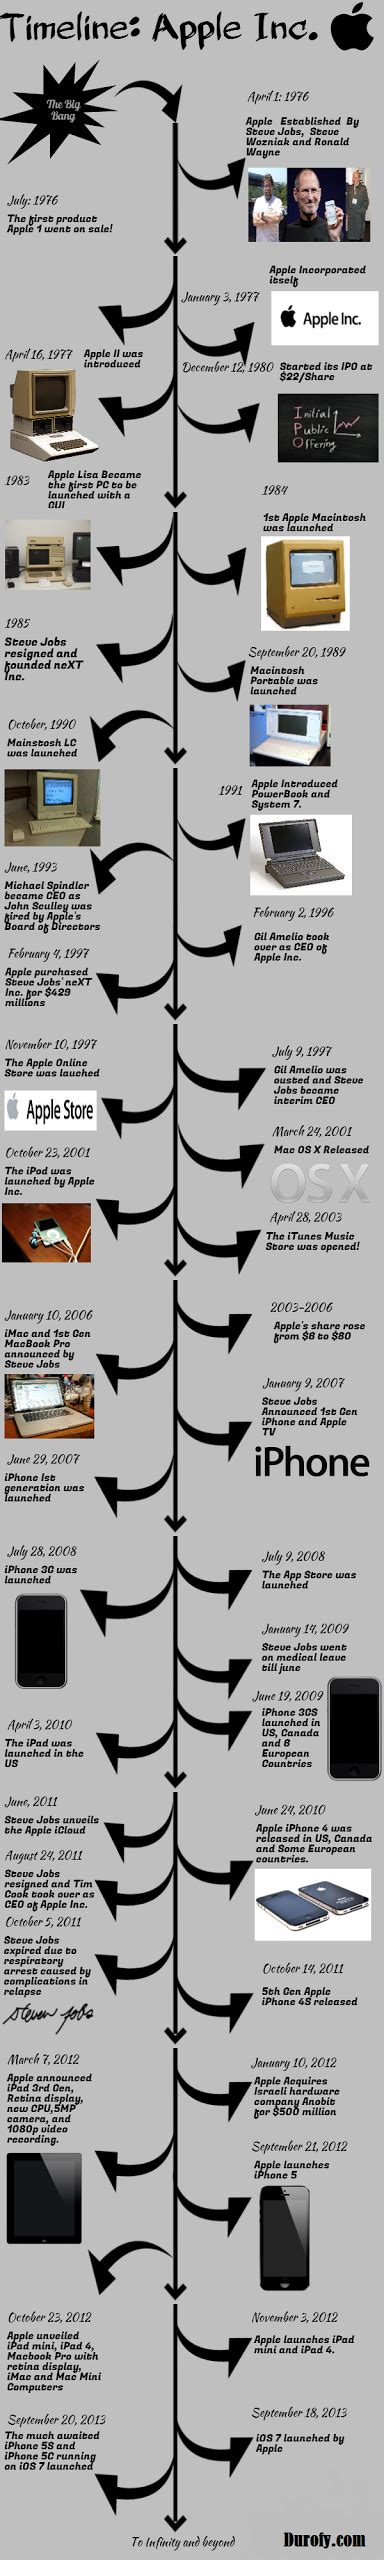 timeline apple releases timeline infographic history timeline technology history kulturaupice